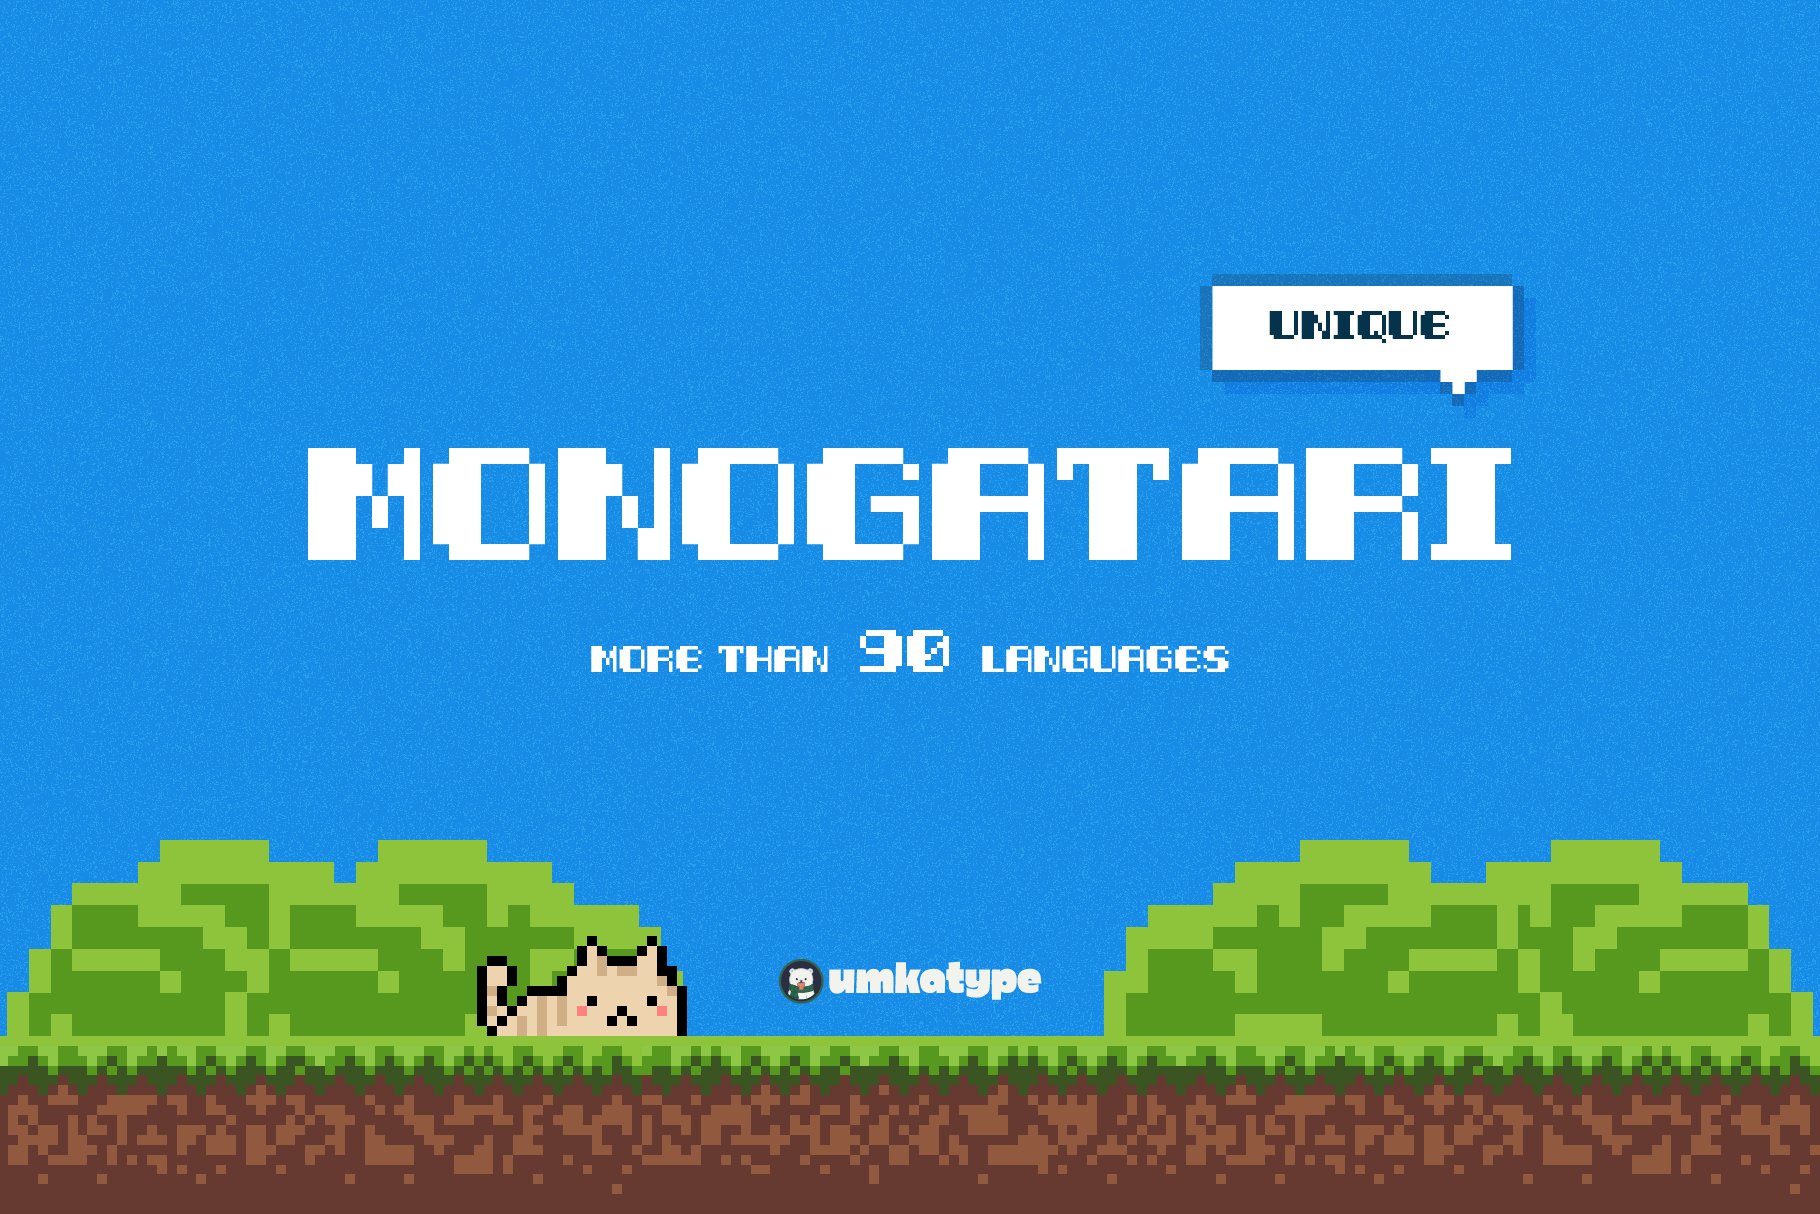 Monogatari Font cover image.